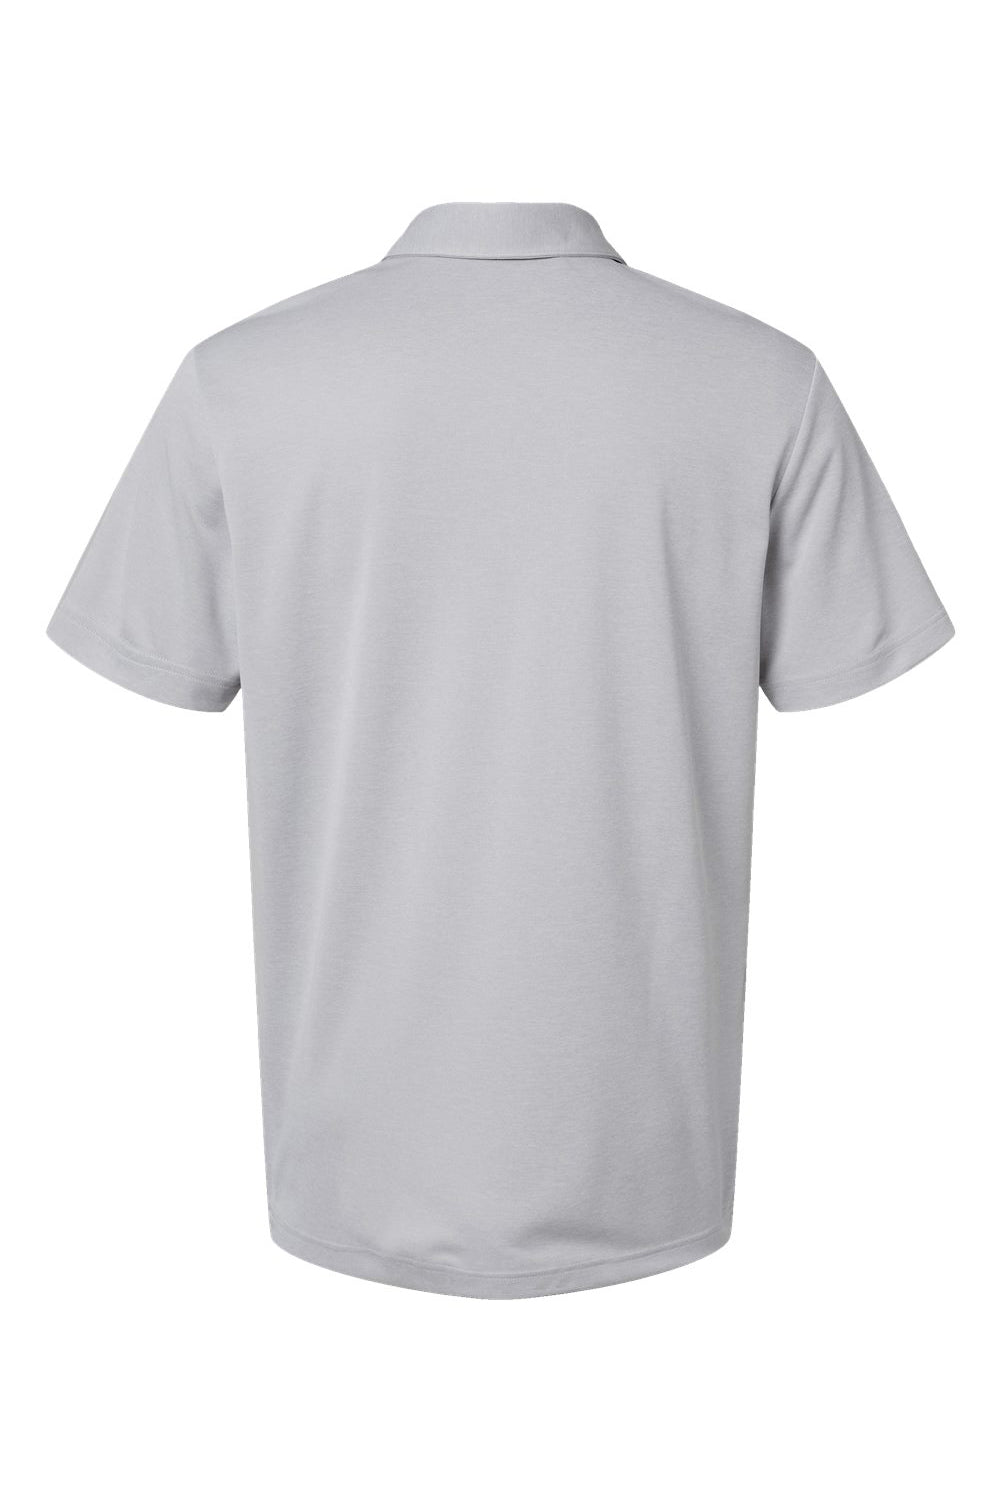 Adidas A582 Mens Heathered Short Sleeve Polo Shirt Grey Melange Flat Back